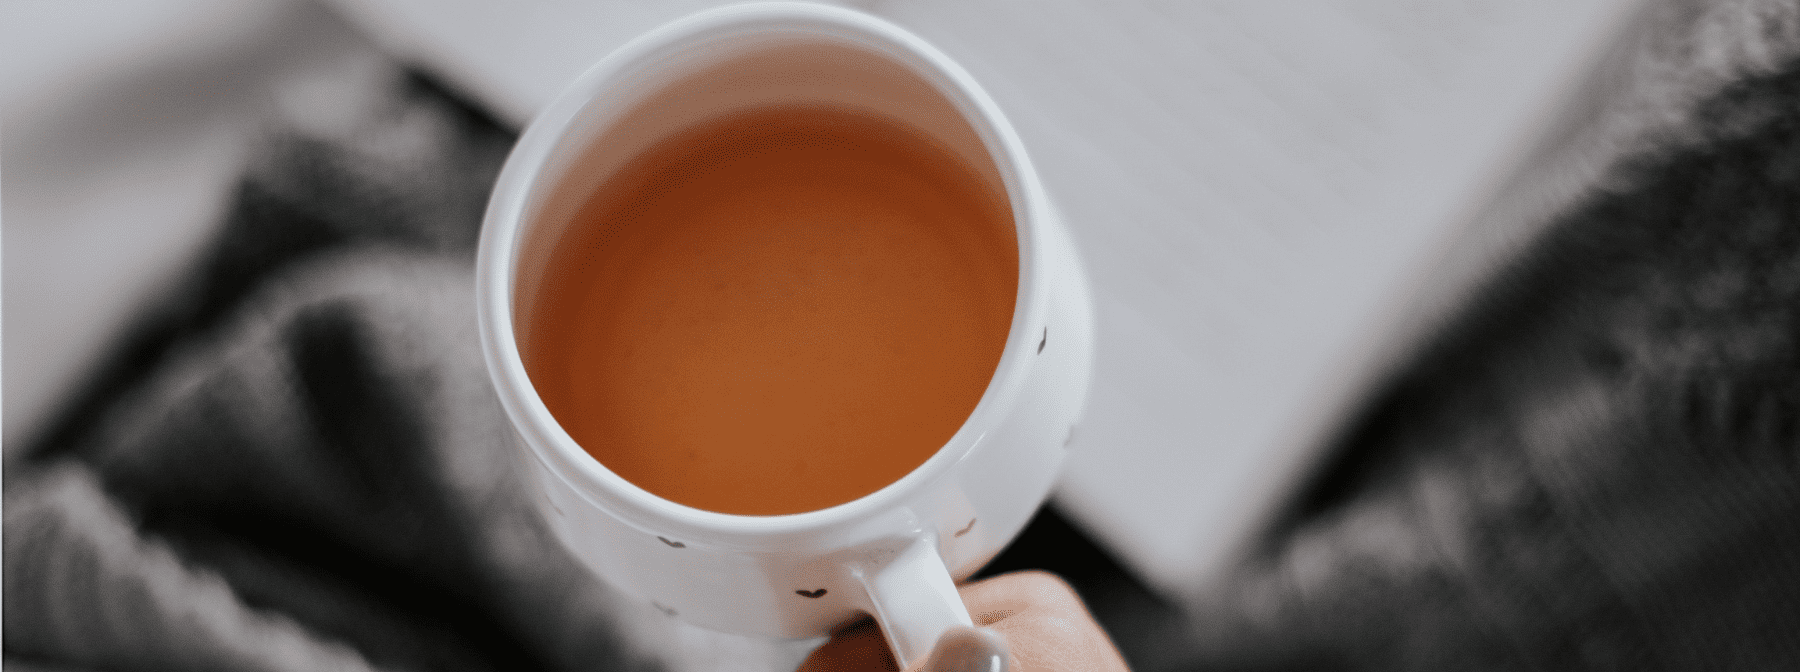 Here's the Tea: Studies Show Drinking Tea Boosts Longevity